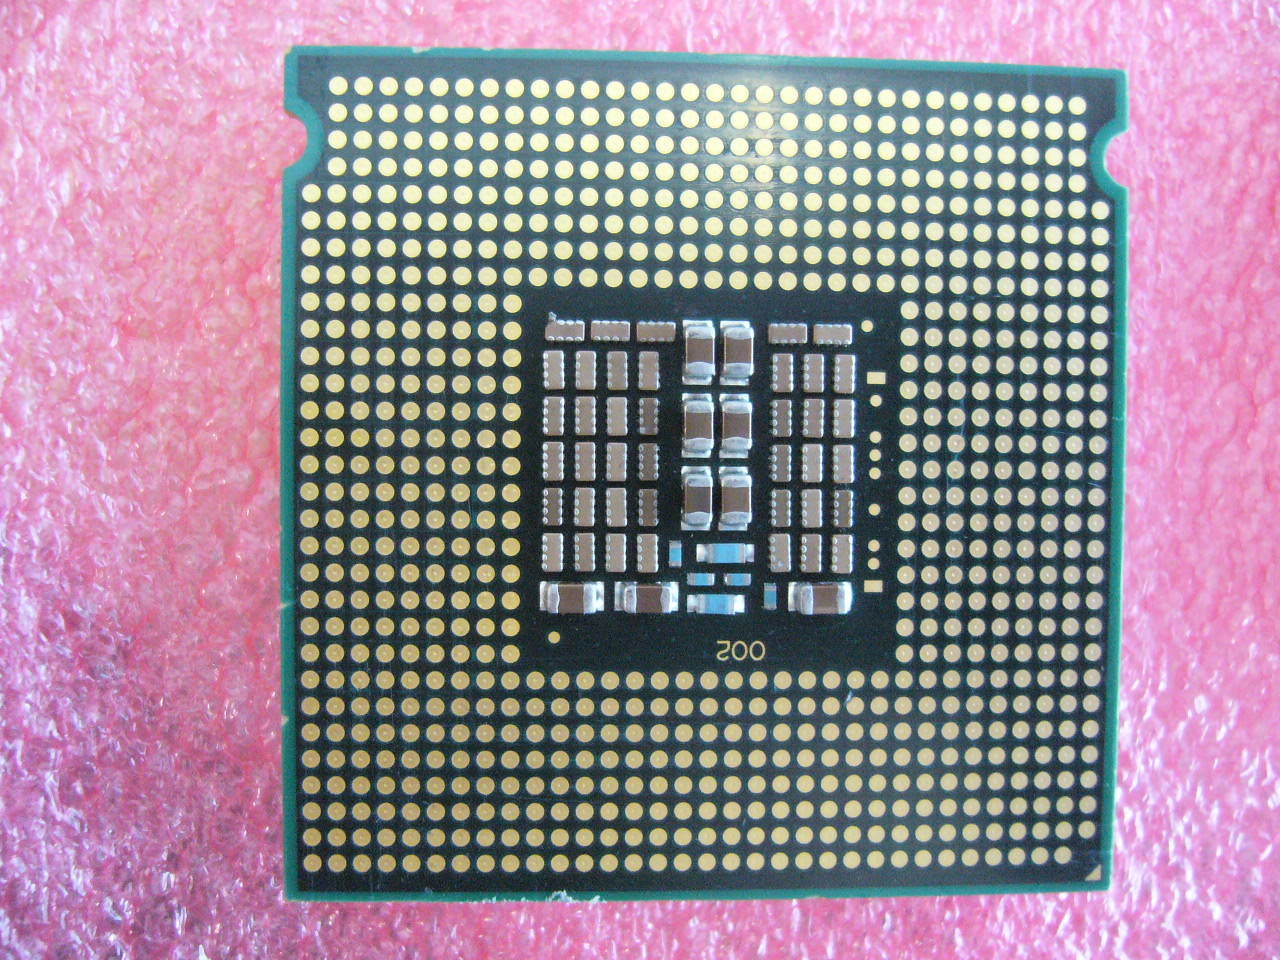 QTY 1x Intel Xeon CPU Quad Core E5405 2.00Ghz/12MB/1333Mhz LGA771 SLBBP - Click Image to Close